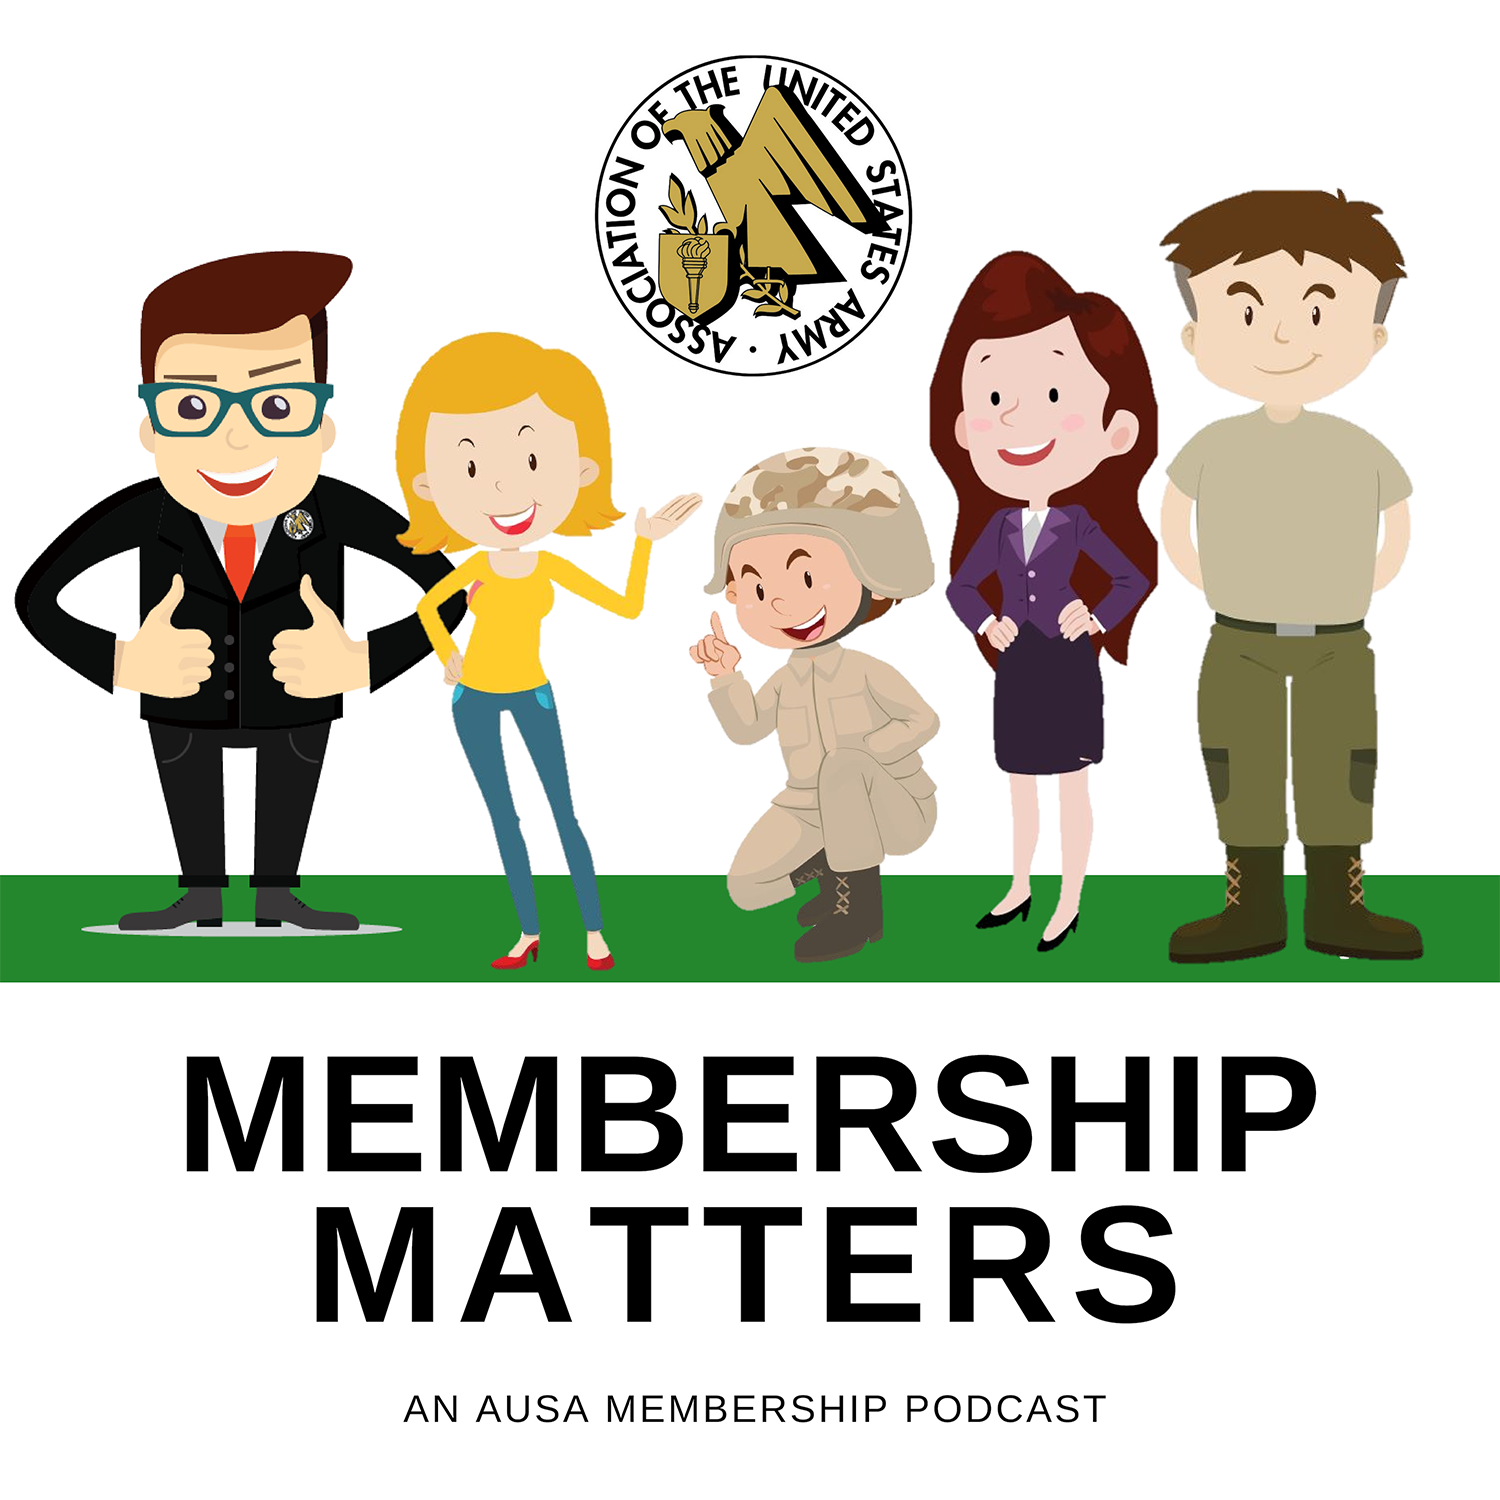 AUSA’s Membership Matters Podcast